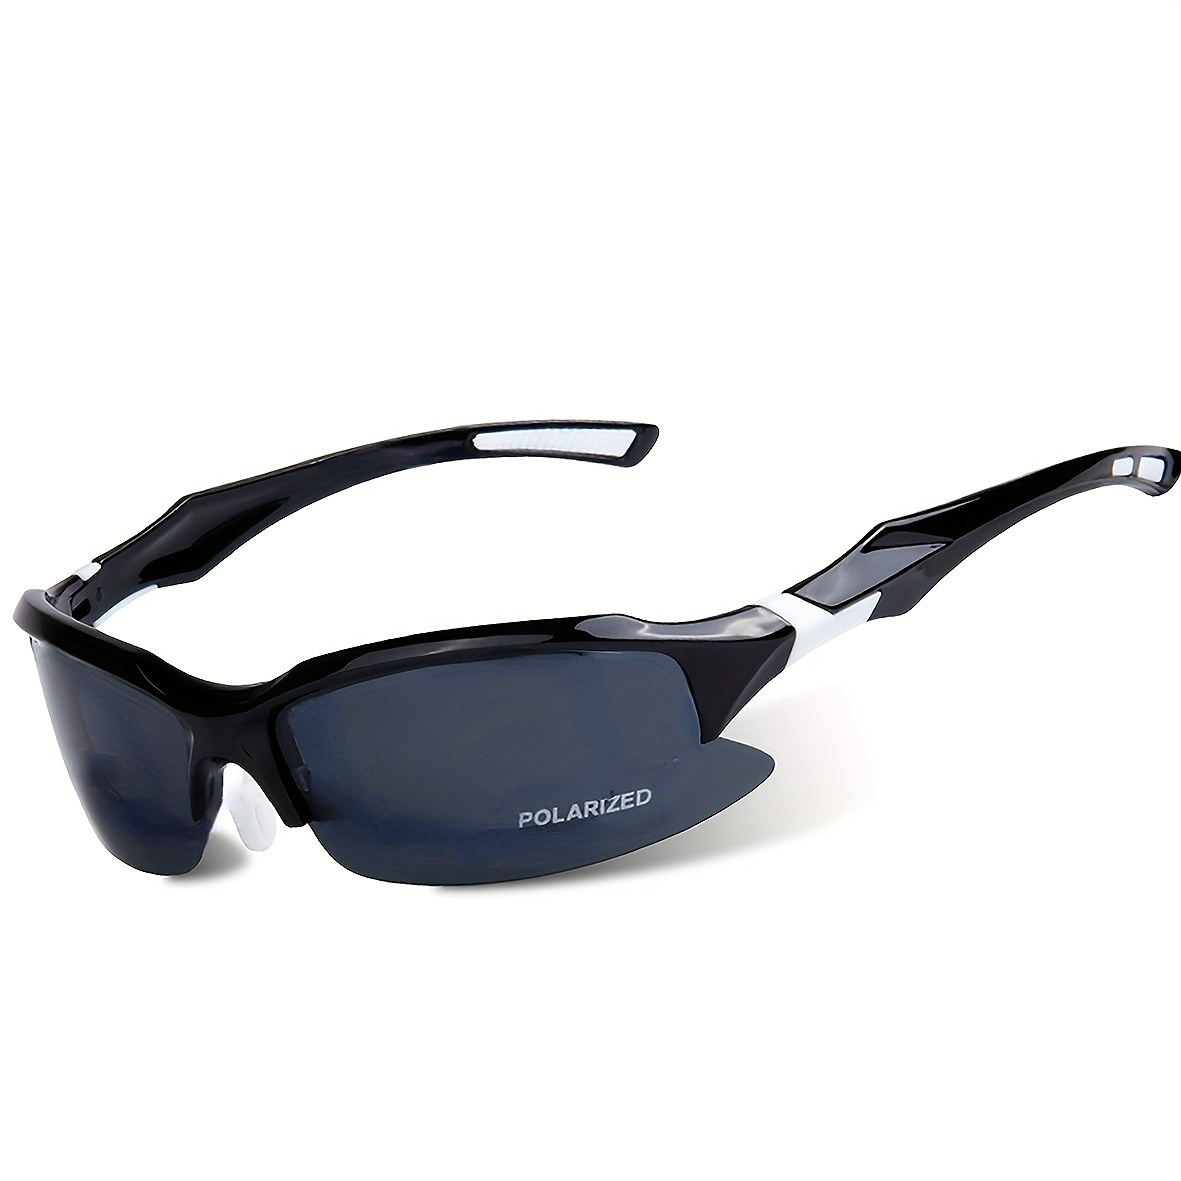 Shop UV 400 Protection Sports Polarized Sunglasses for Men Women